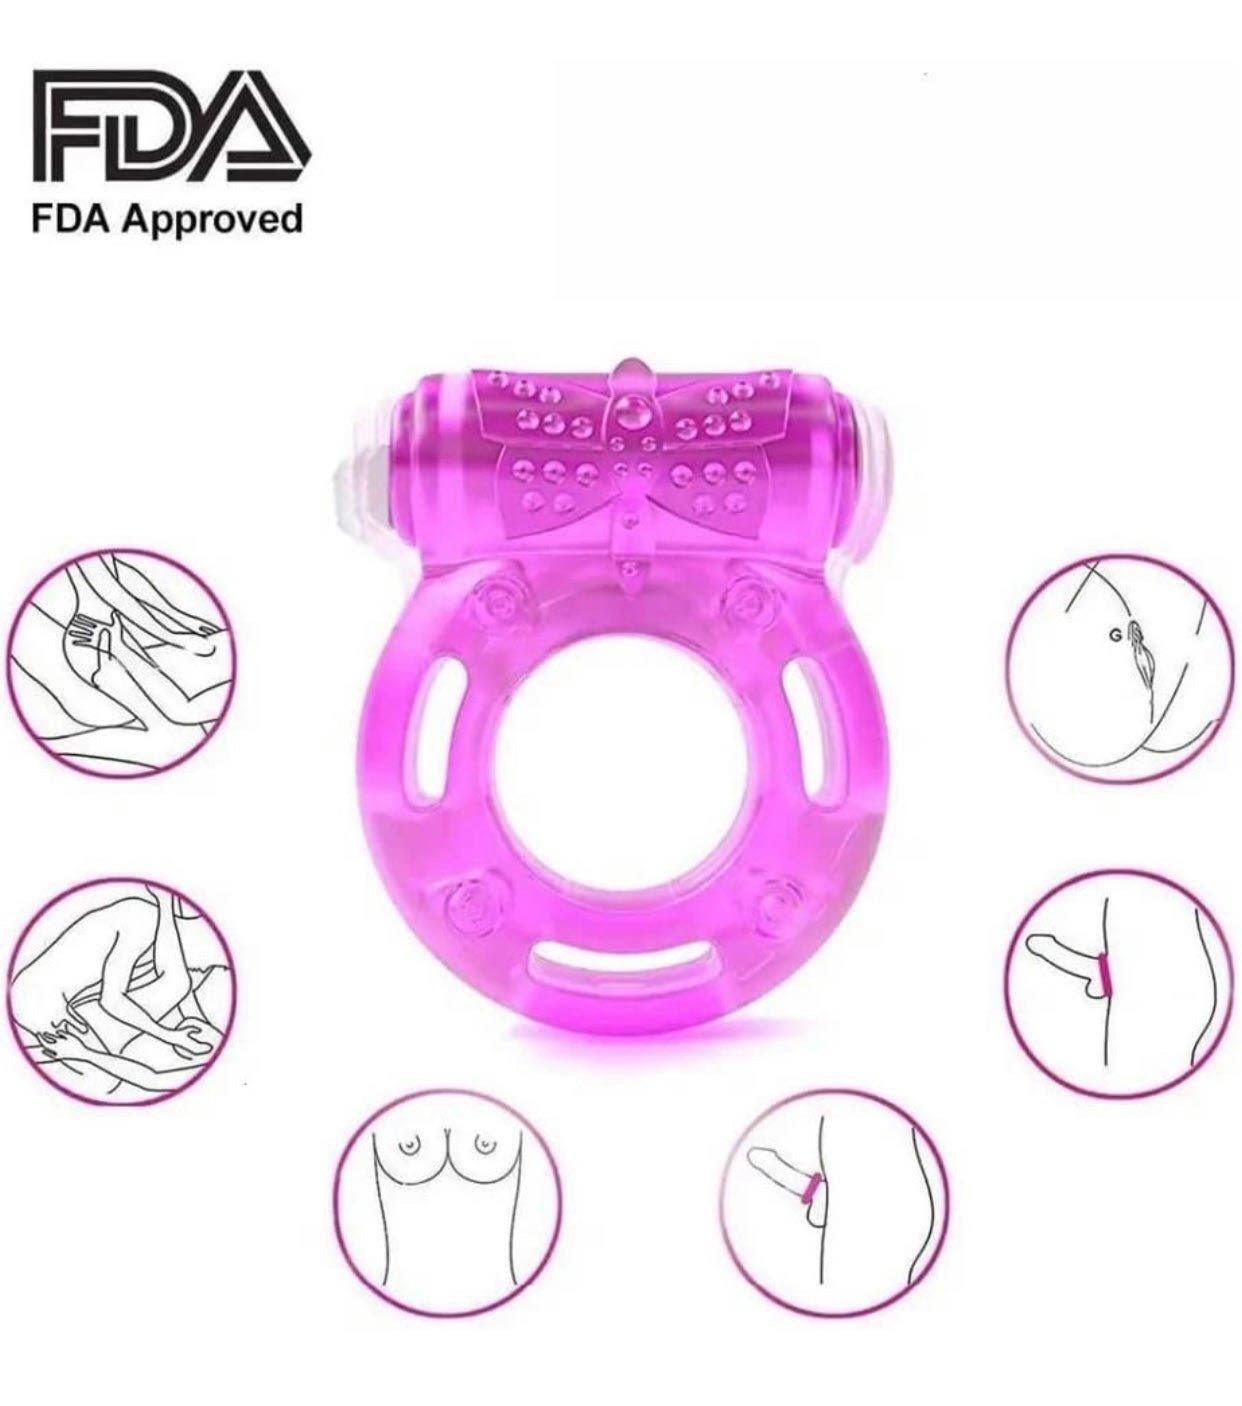 NRN's Disposable Vibrating Penis Ring - NRN Specialties